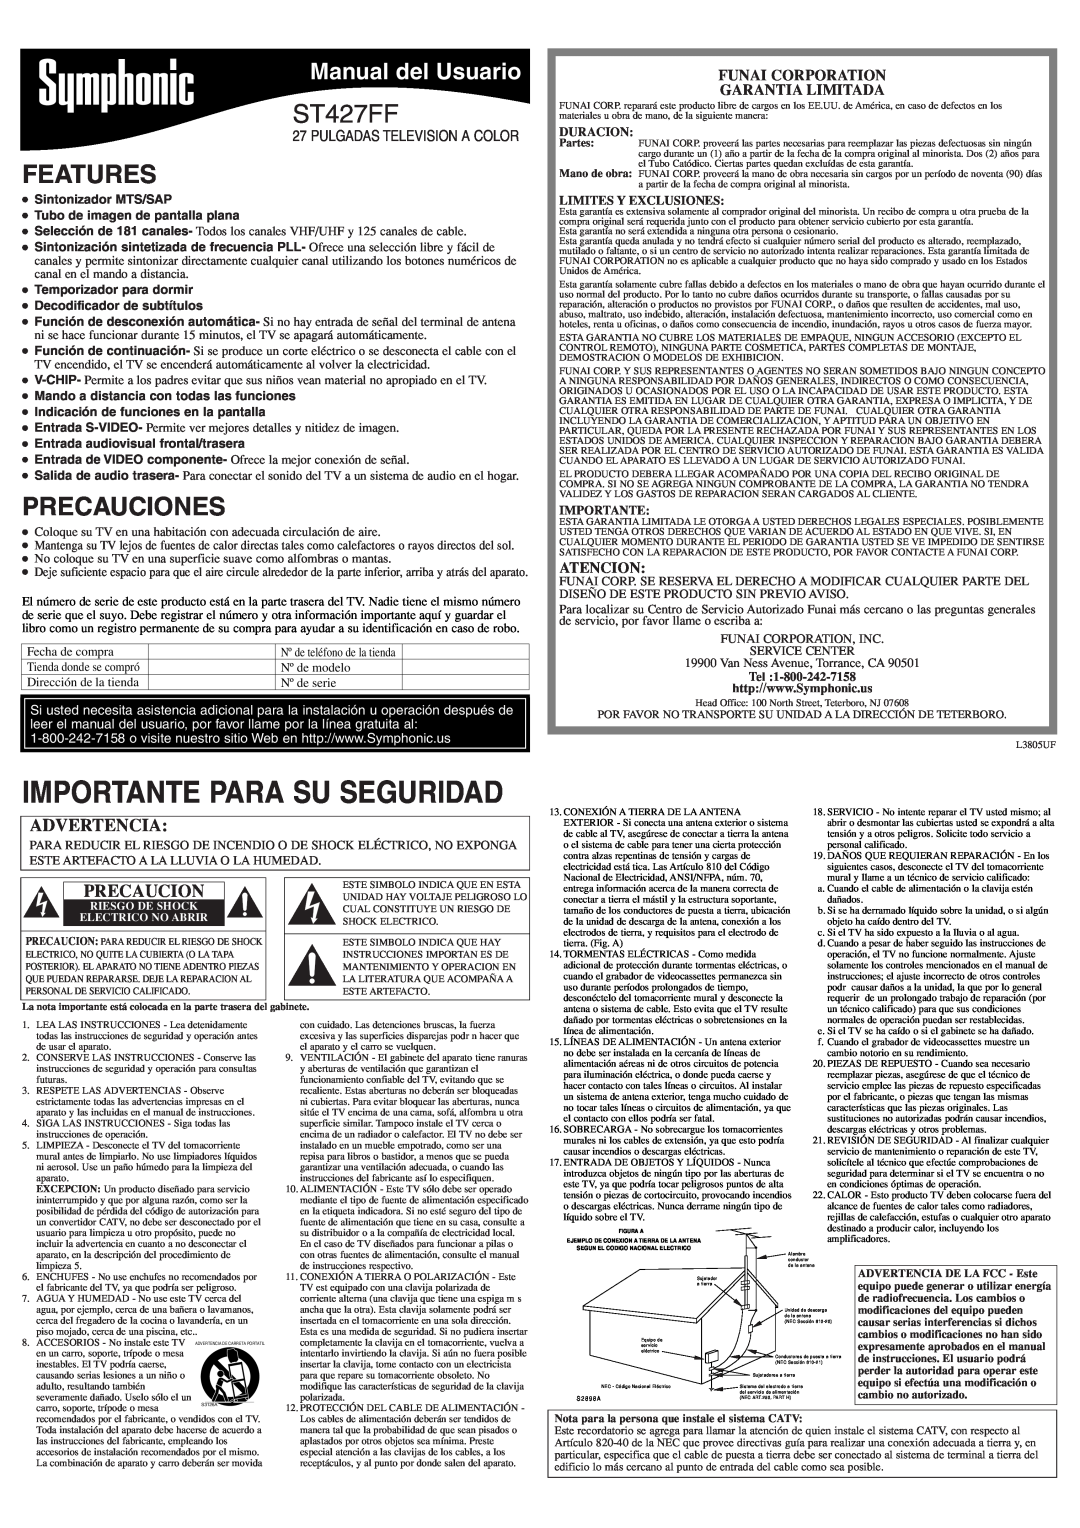 Symphonic ST427FF Precauciones, Manual del Usuario, Funai Corporation Garantia Limitada, Atencion, Features, Advertencia 